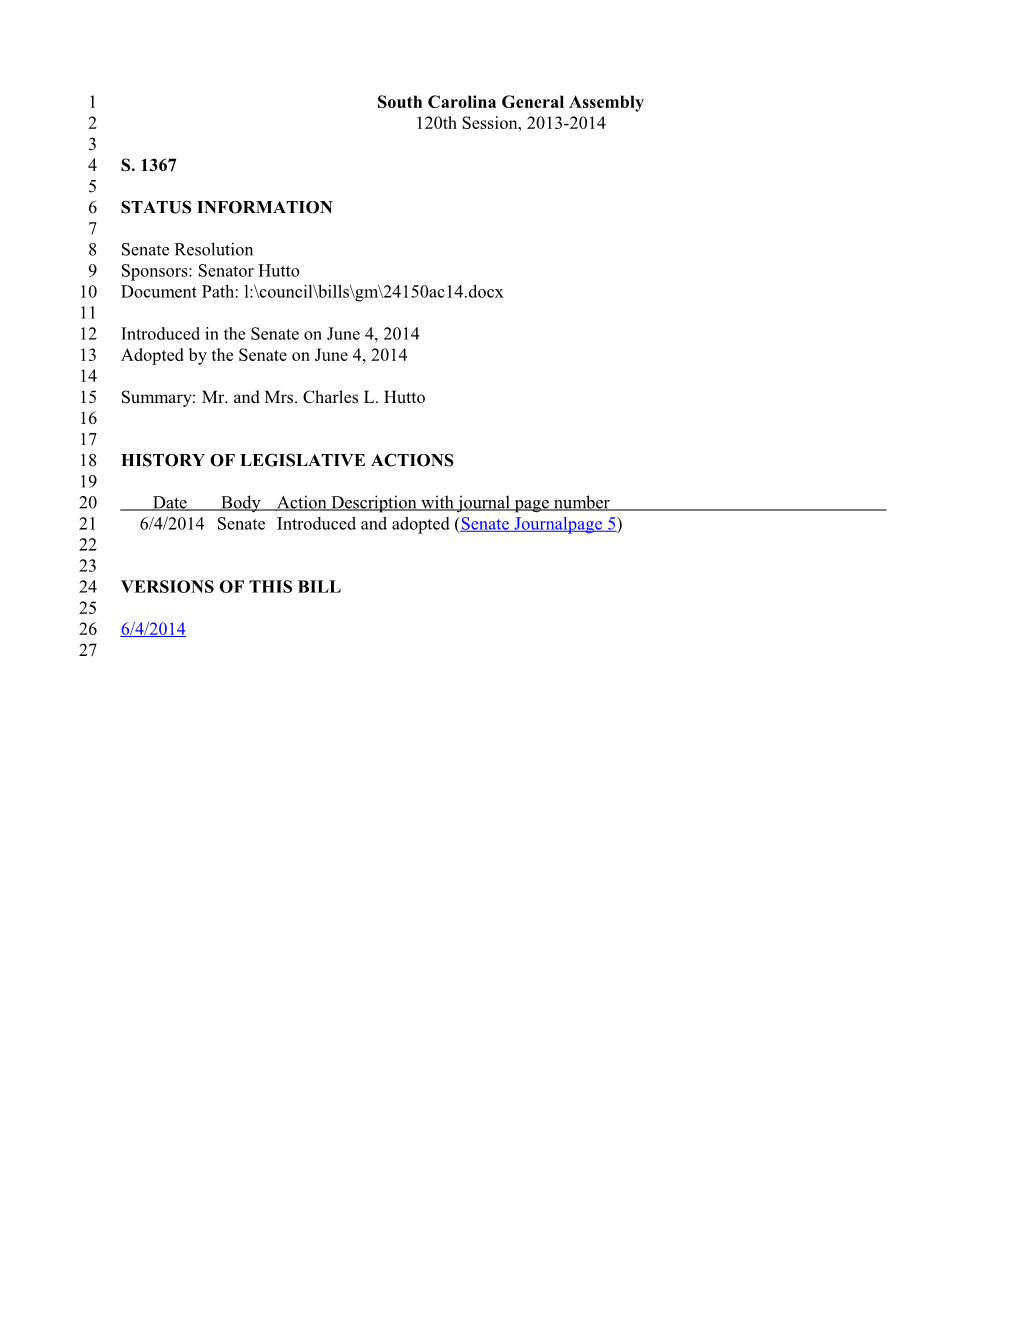 2013-2014 Bill 1367: Mr. and Mrs. Charles L. Hutto - South Carolina Legislature Online